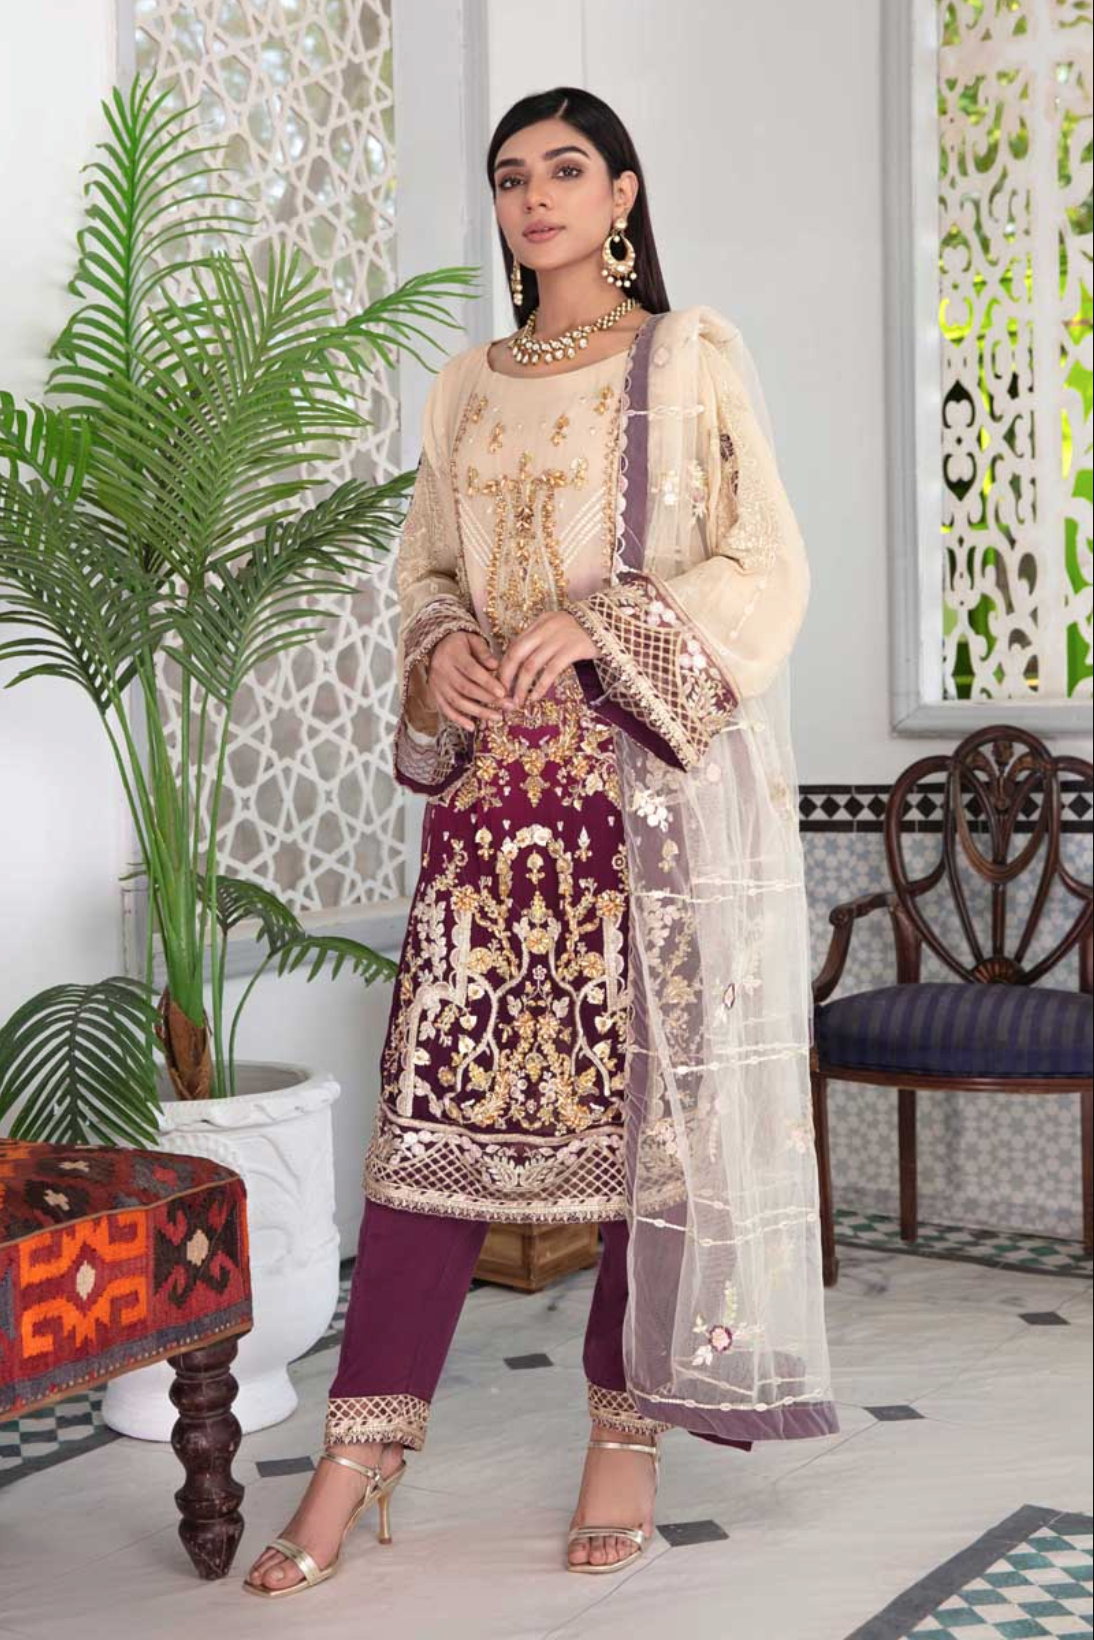 Gold and Purple Plum Emaan Adeel Luxury Chiffon Ladies Suit